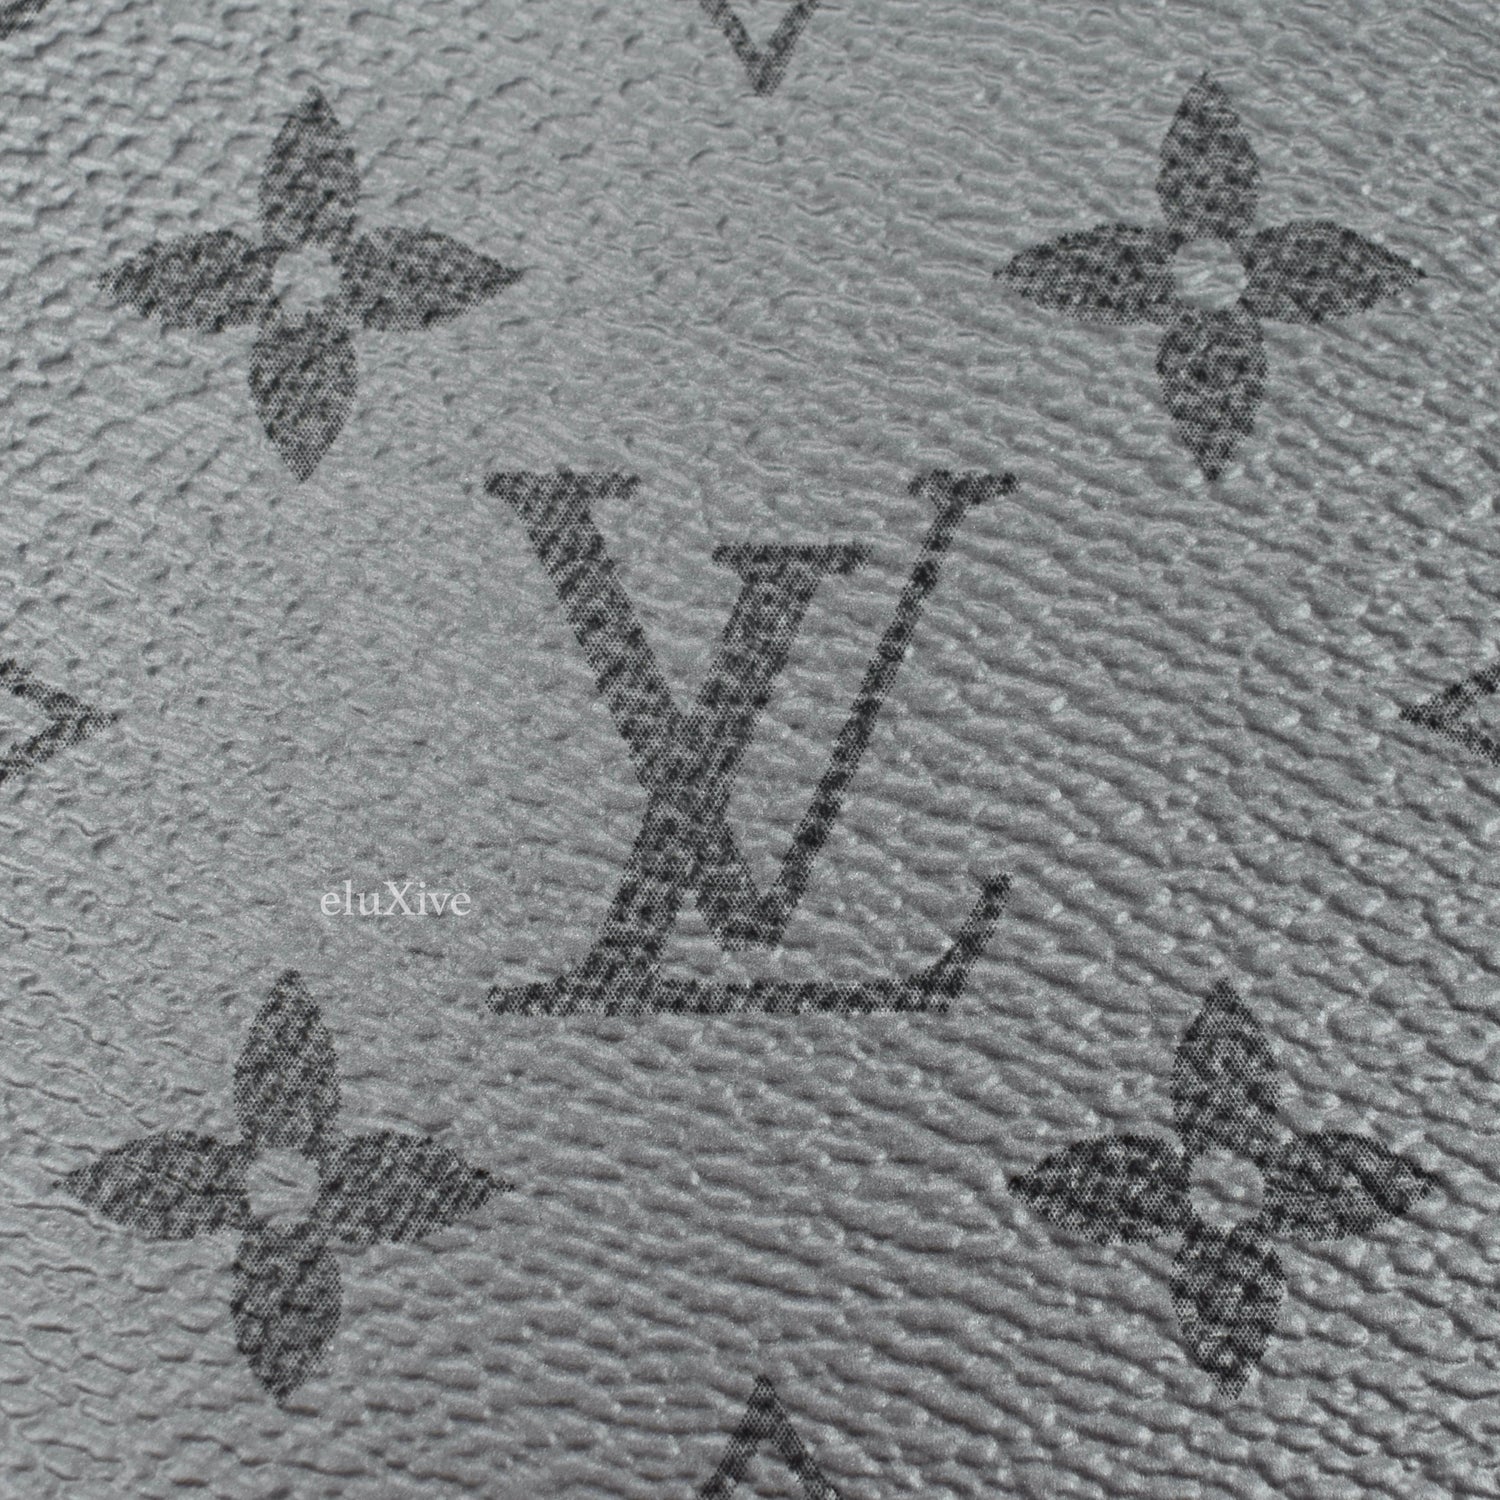 Authentic New Rare Louis Vuitton Gun Metal Grey Monogram Multiple Wallet  Bifold